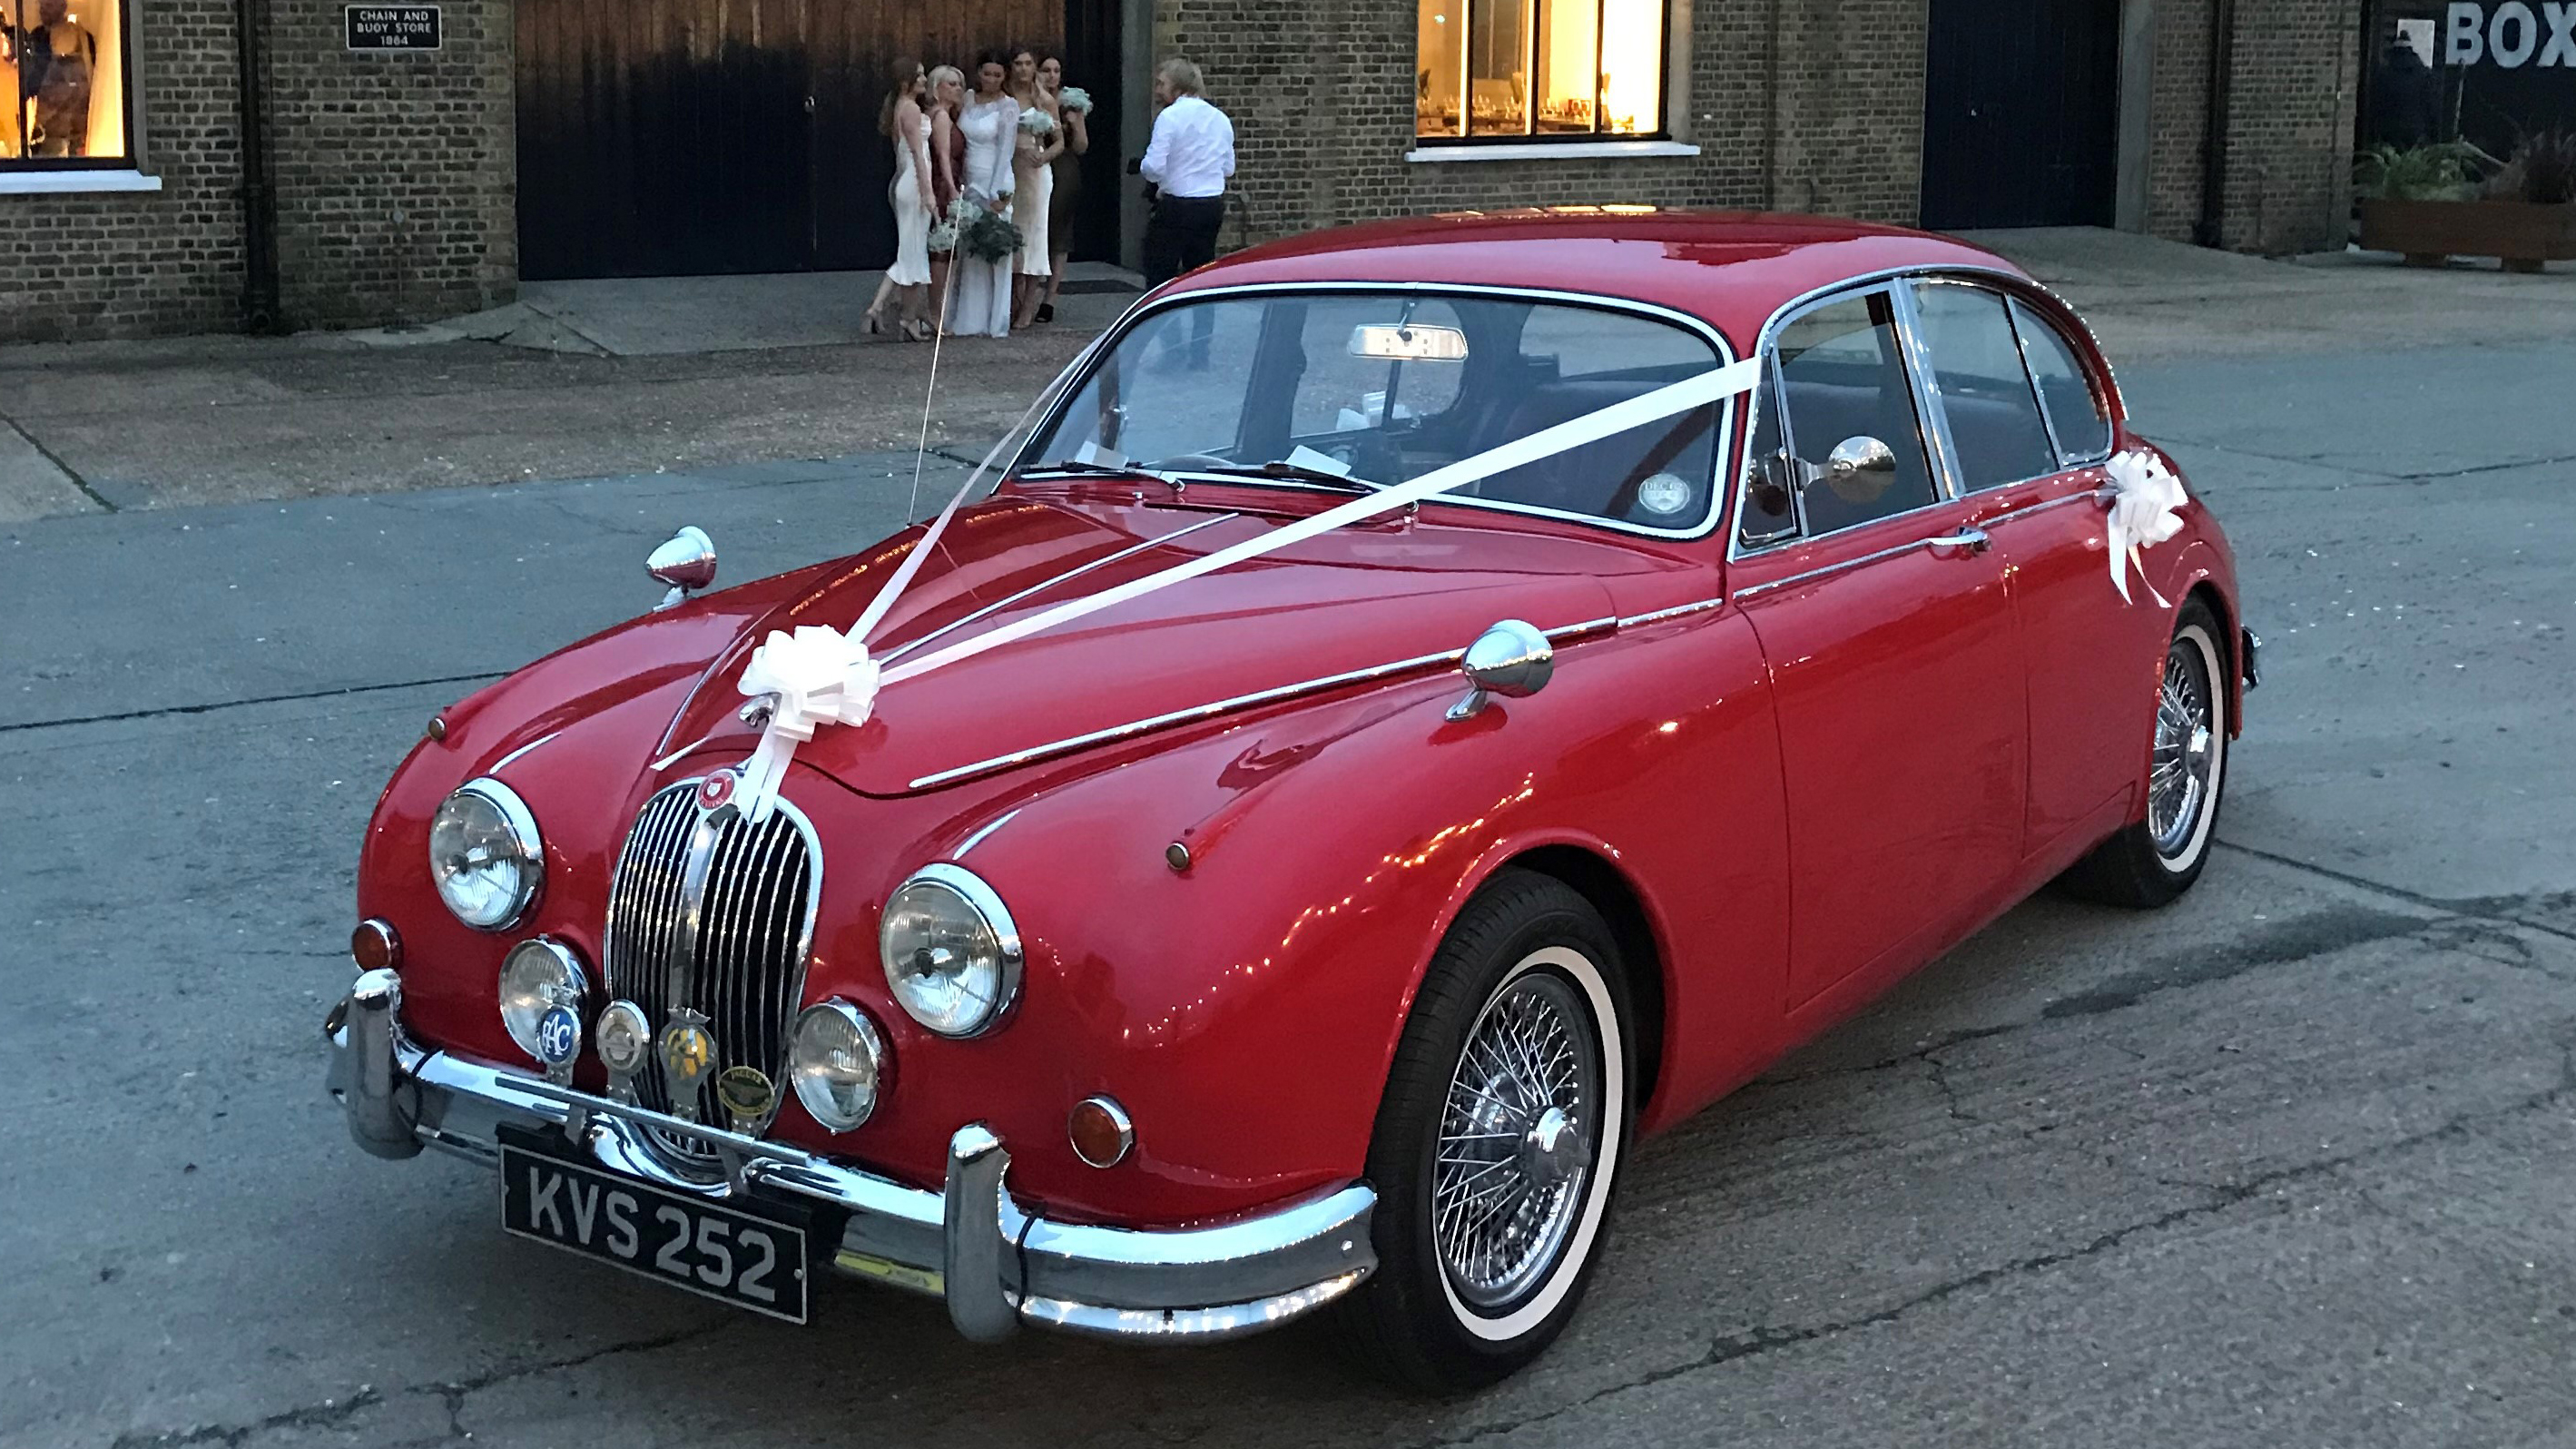 Jaguar Mk II wedding car for hire in Woodford Green, Essex